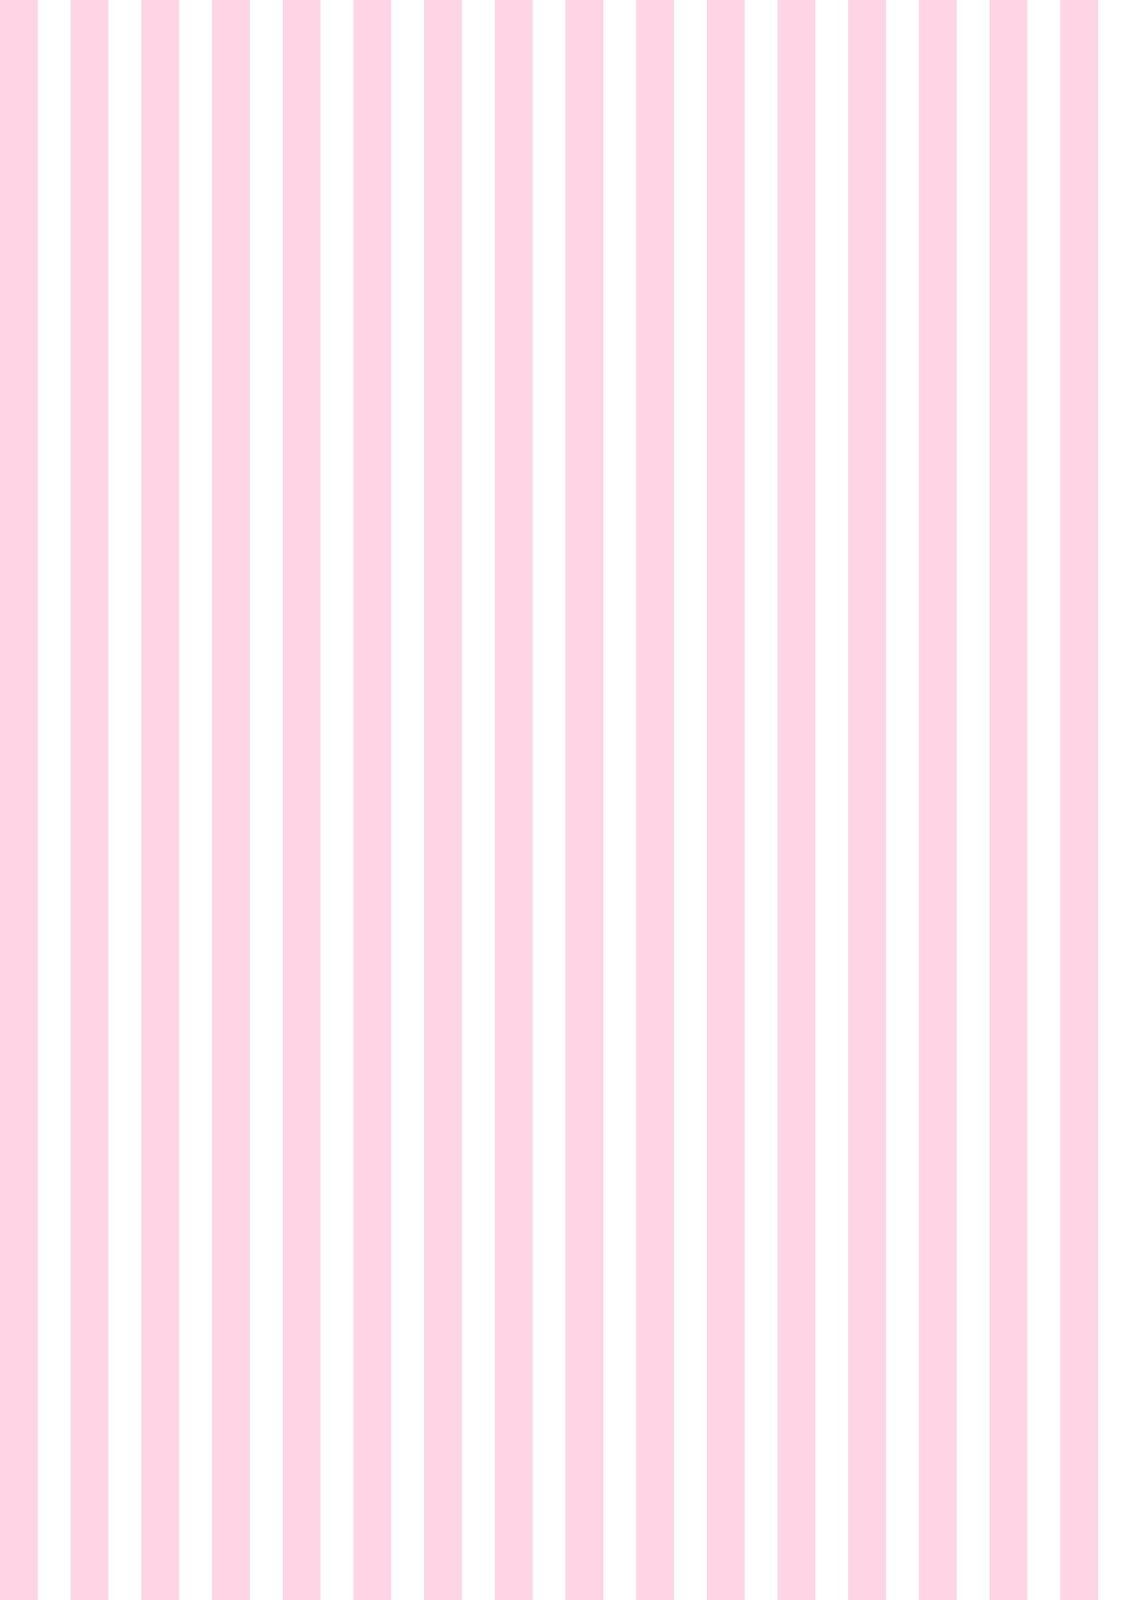 Pretty Photo of Scrapbook Aesthetic Wallpaper. Scrapbook Aesthetic Wallpaper Free Digital Striped Scrapboo. Pink wallpaper, Scrapbook paper, iPhone background